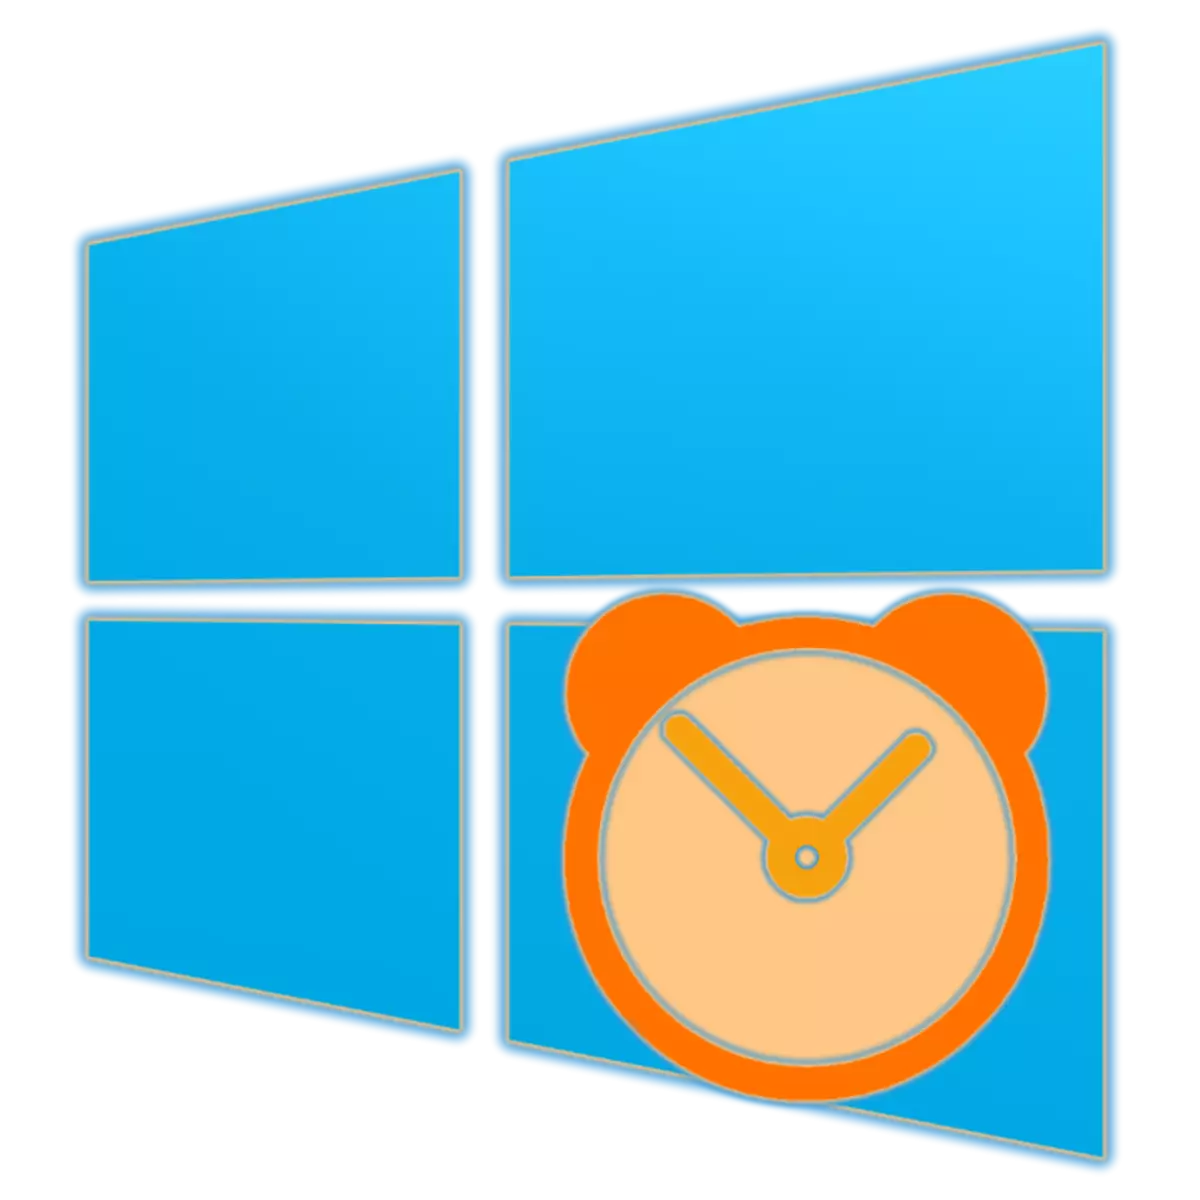 Windows 10이있는 컴퓨터에 알람 시계를 넣는 방법